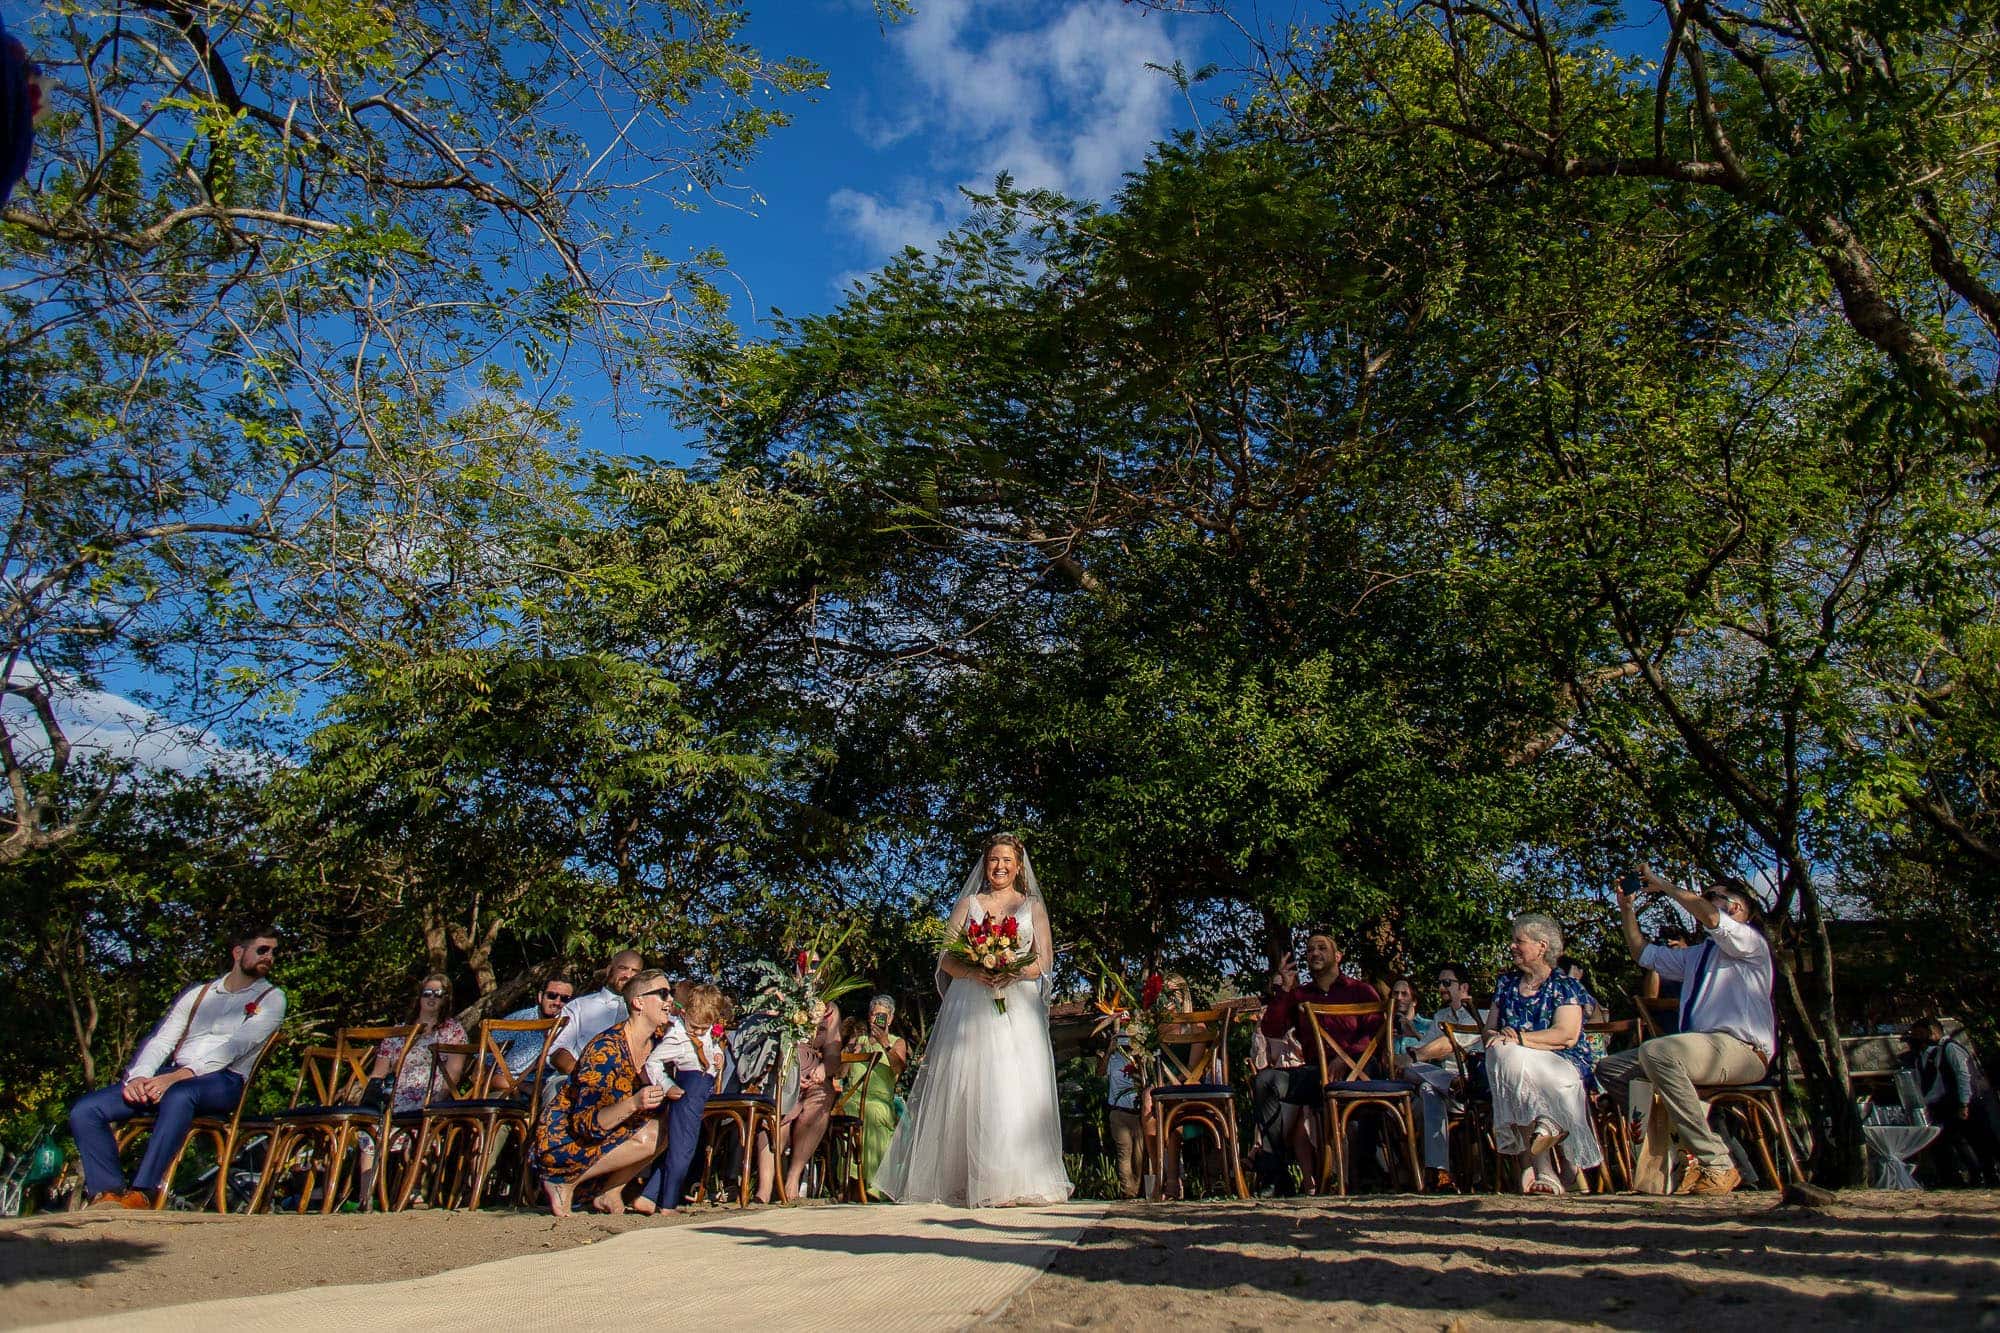 The bride making her entrance